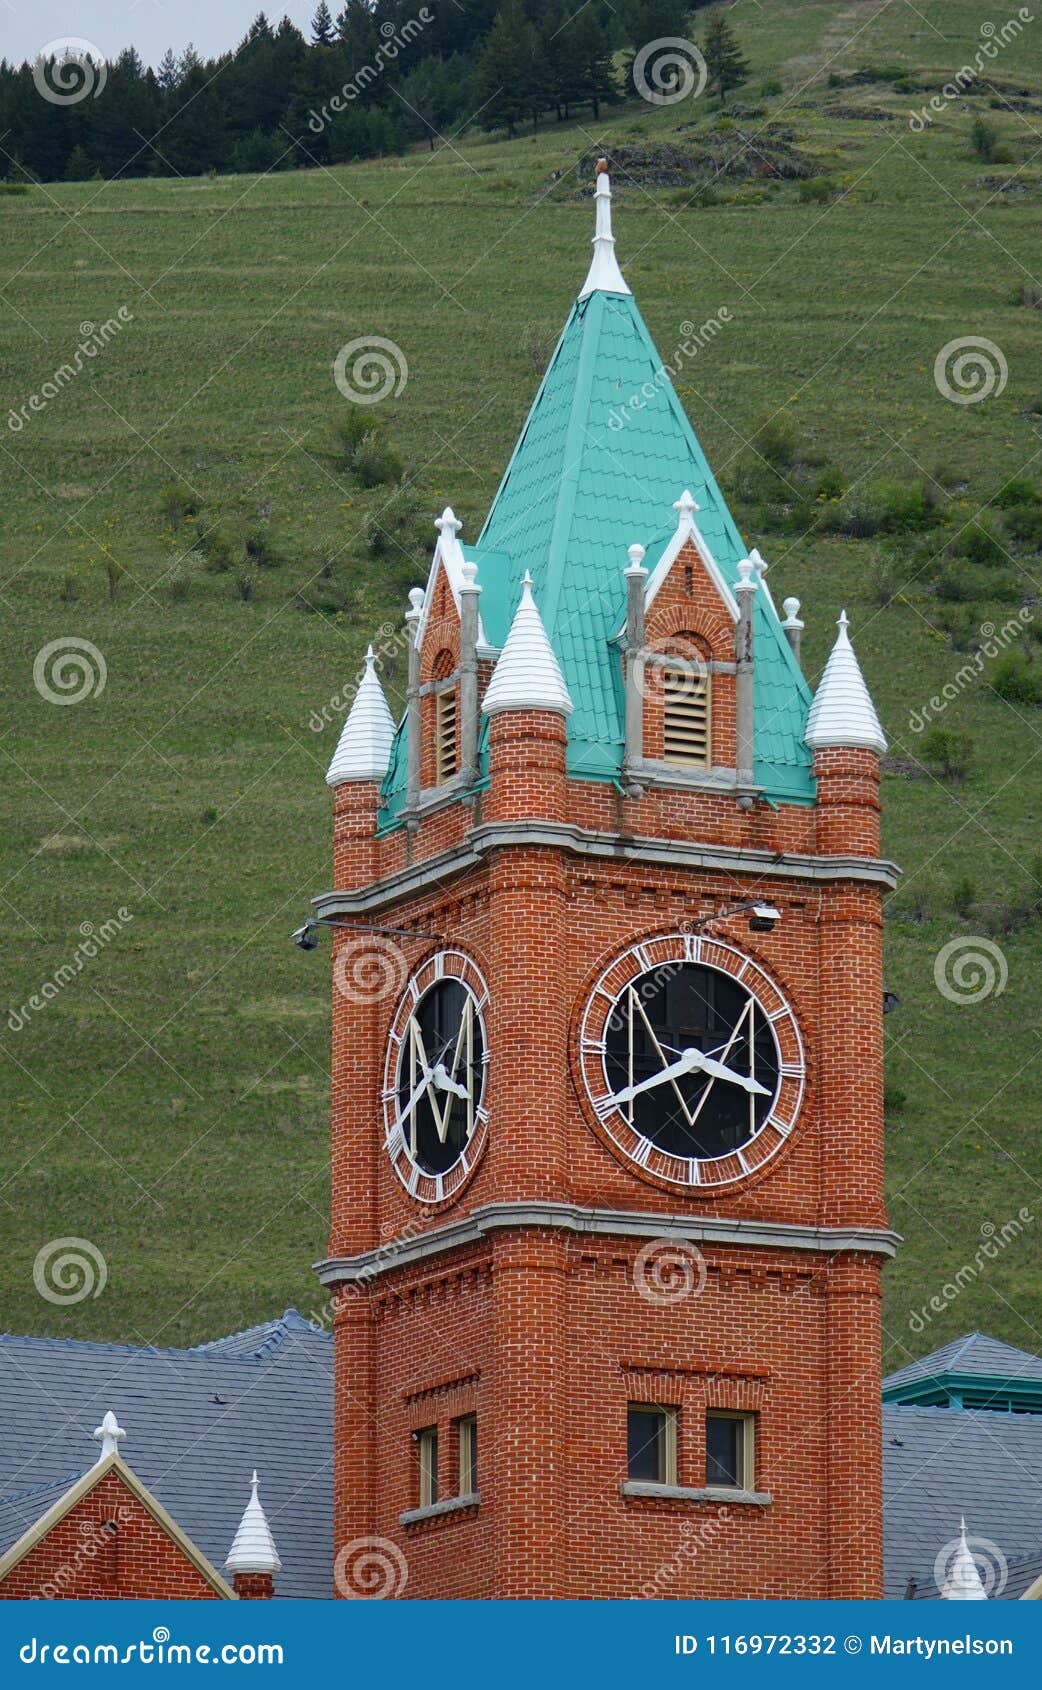 missoula landmark since 1898 - montana